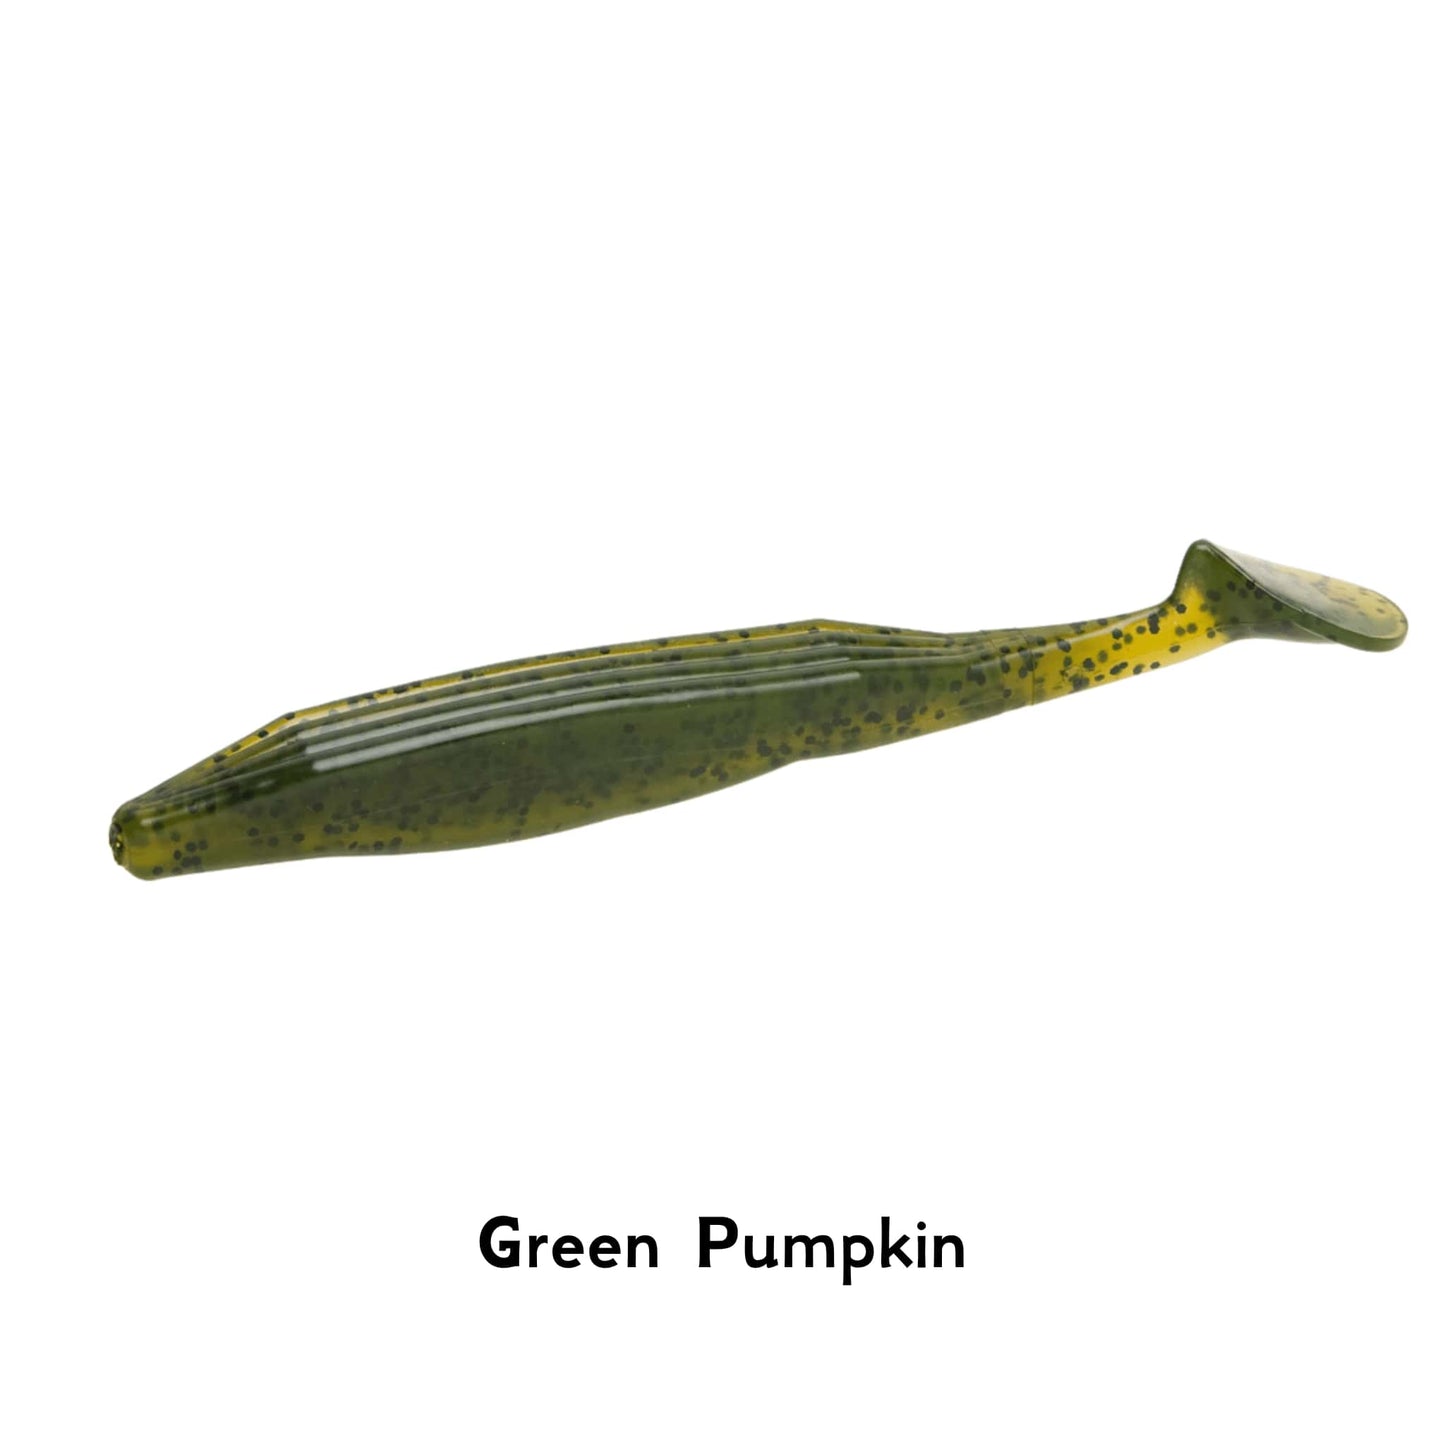 Zoom Swimmin Super Fluke Green Pumpkin 4 Inch 5pcs Soft Bait Fishing Lure ALL COLOURS Paddle Tail Jig Dropshot Lure Texas Carolina Rig Cheb